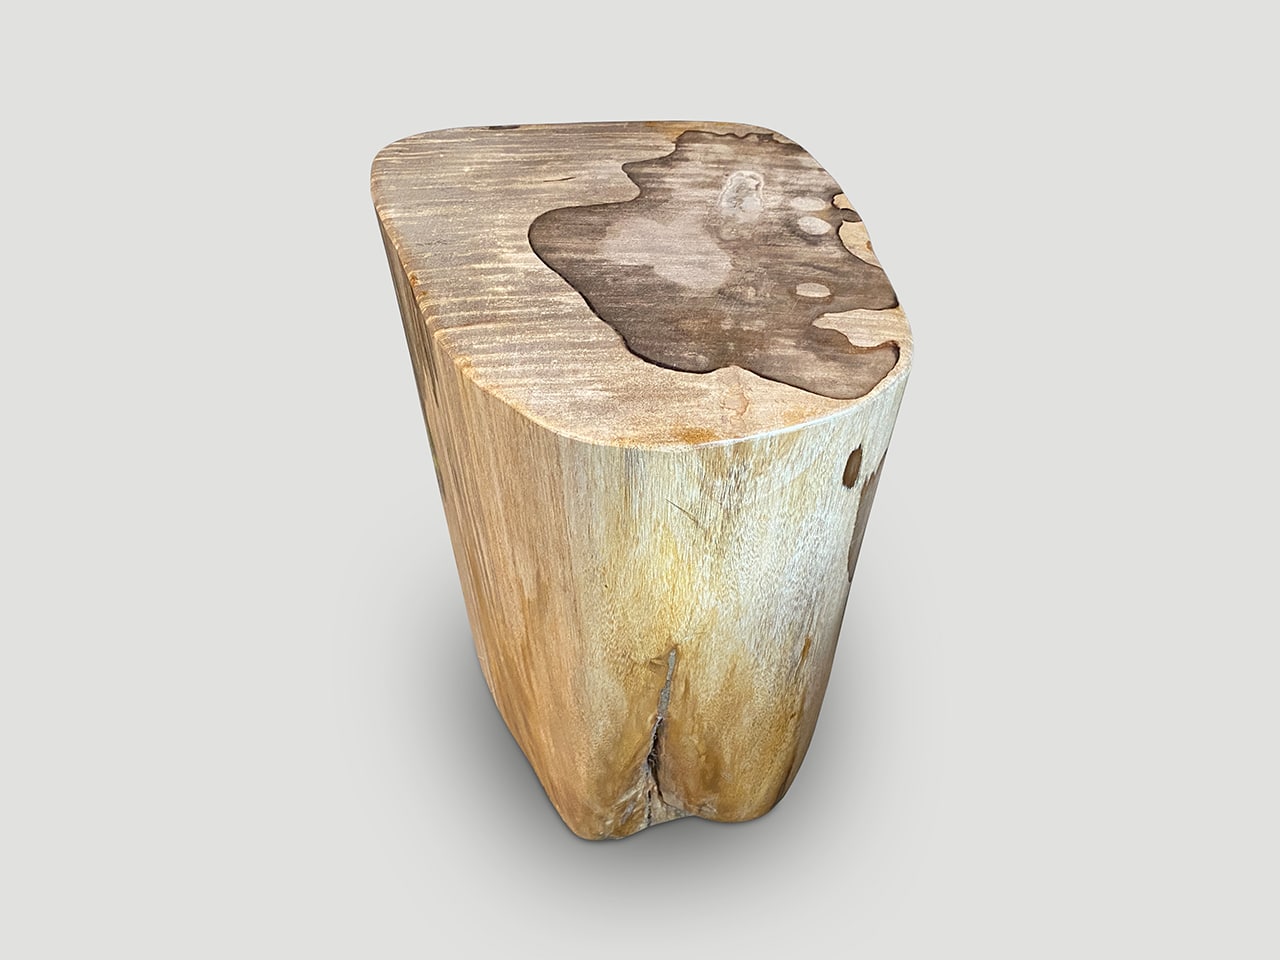 minimalist petrified wood side table with stunning markings